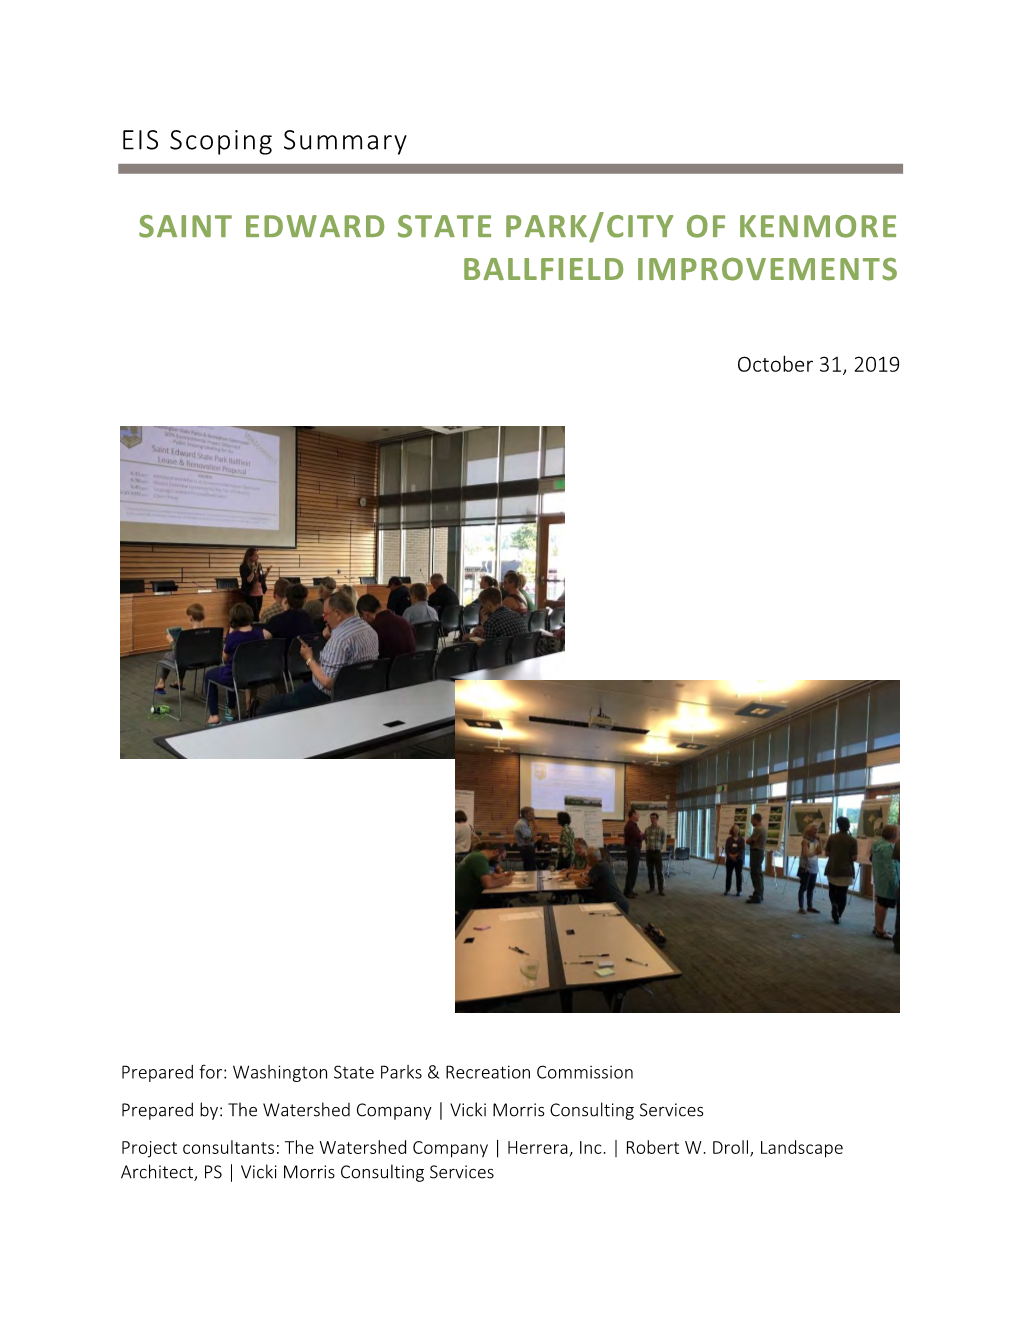 Saint Edward State Park/City of Kenmore Ballfield Improvements